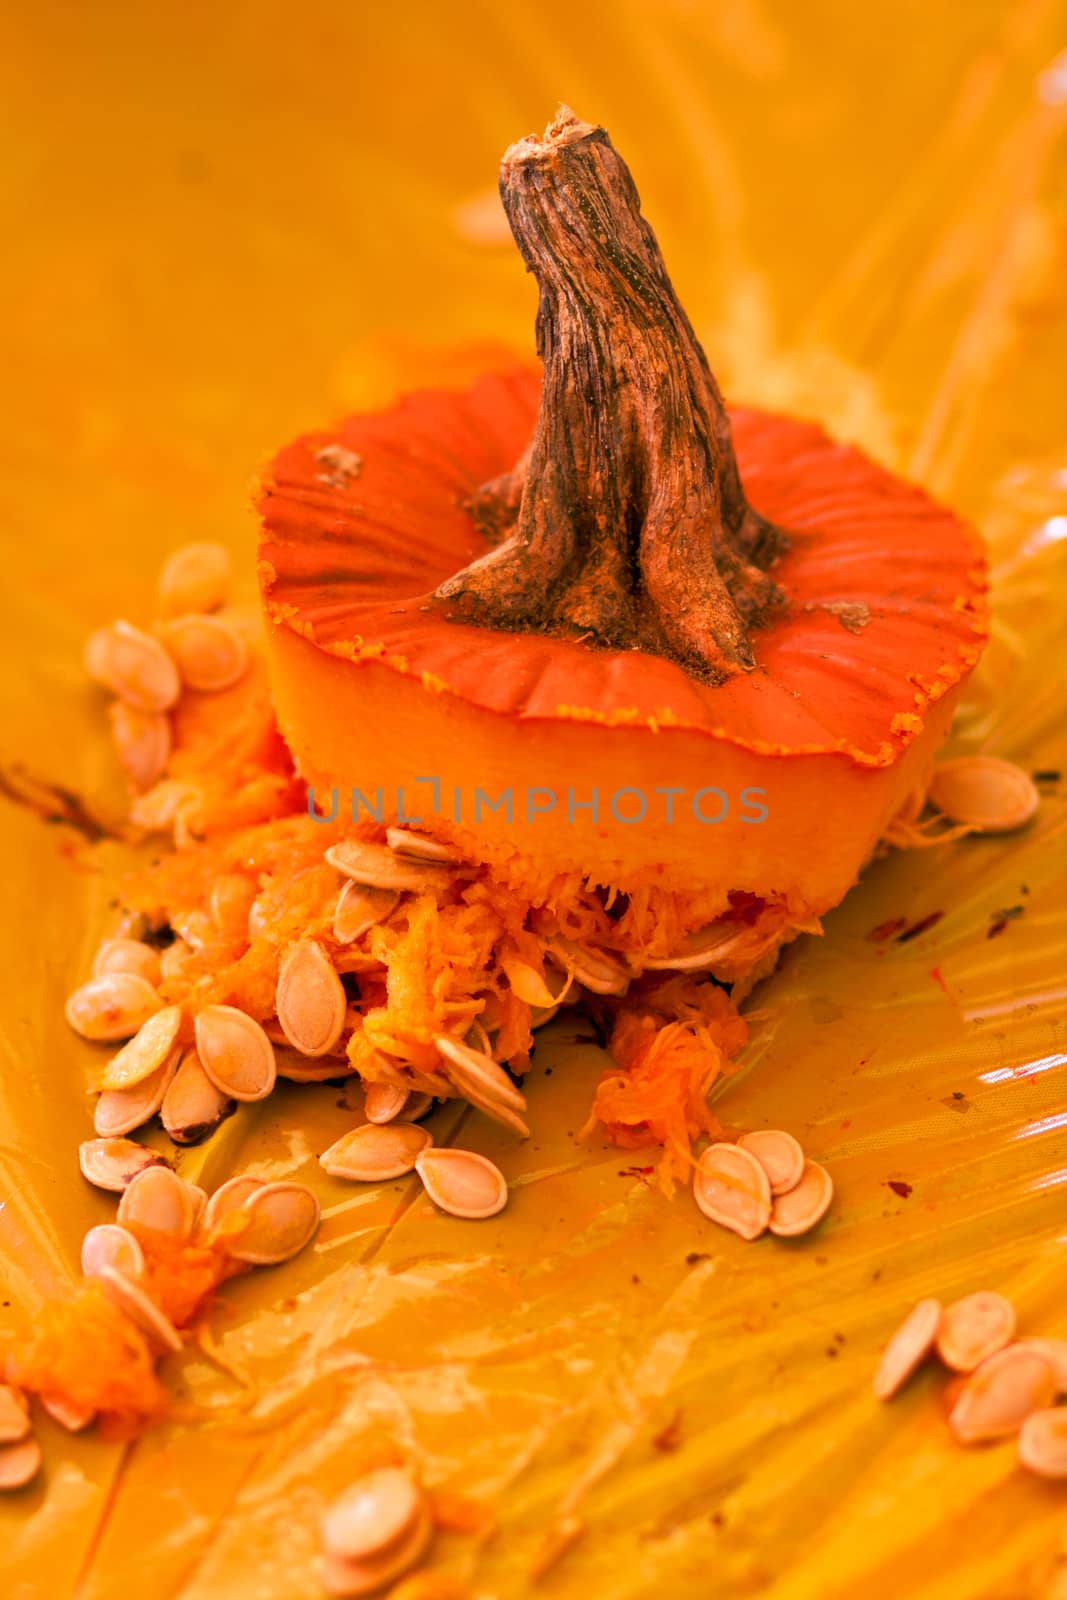 Still Life Of Pumpkin Top And Seeds From Pumpkin Carving by BluIz60